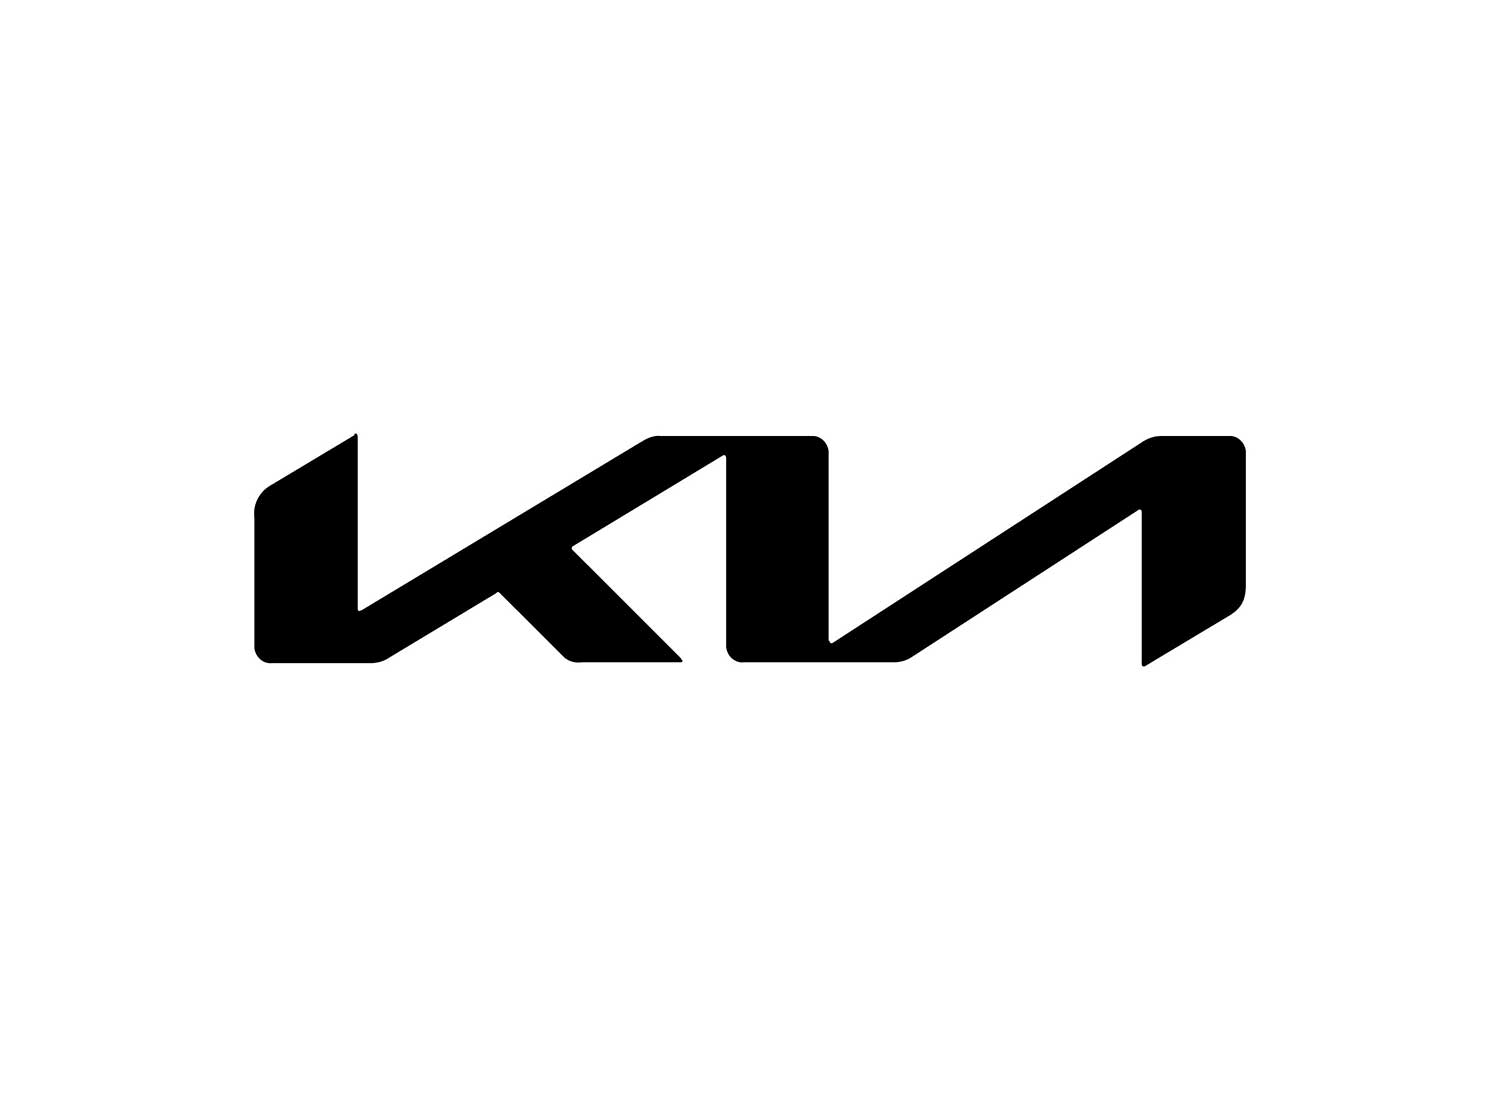 KIA logo - After